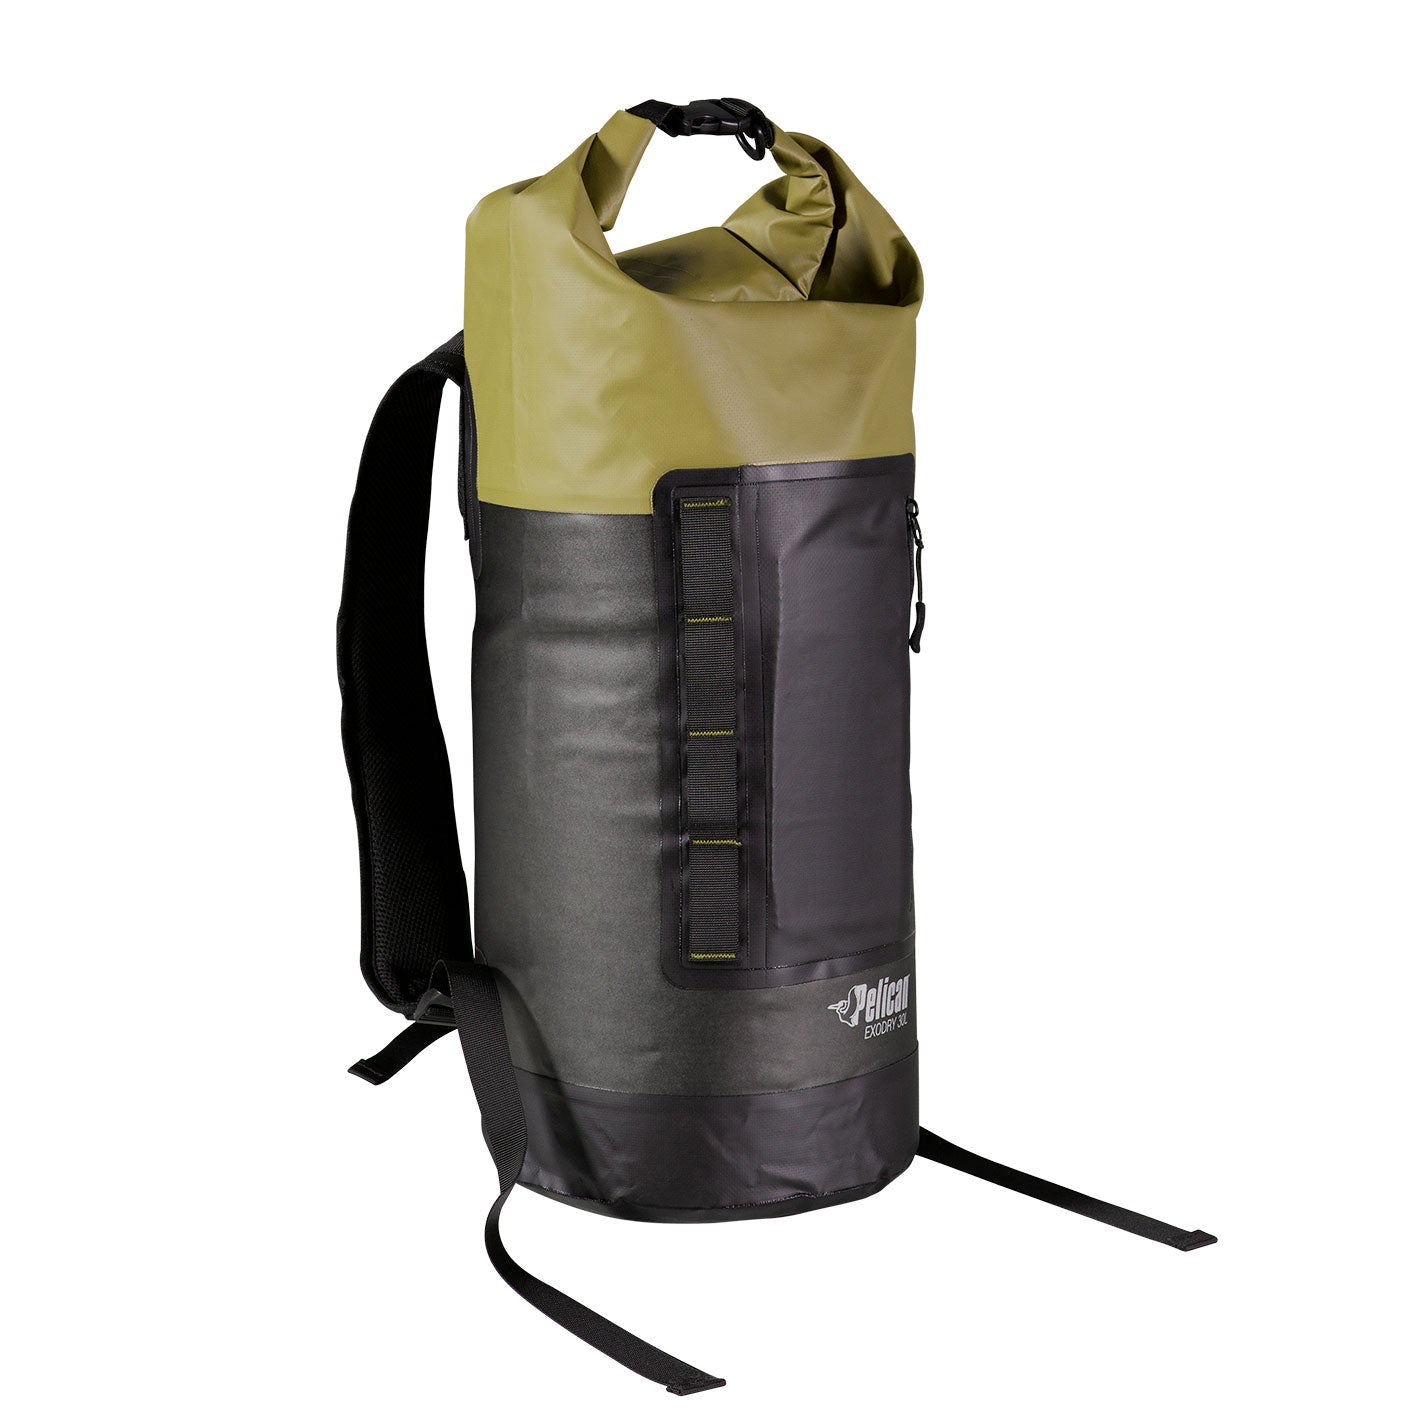 heavy duty PVC padded back & straps Waterproof 20L dry bag roll top rucksack 